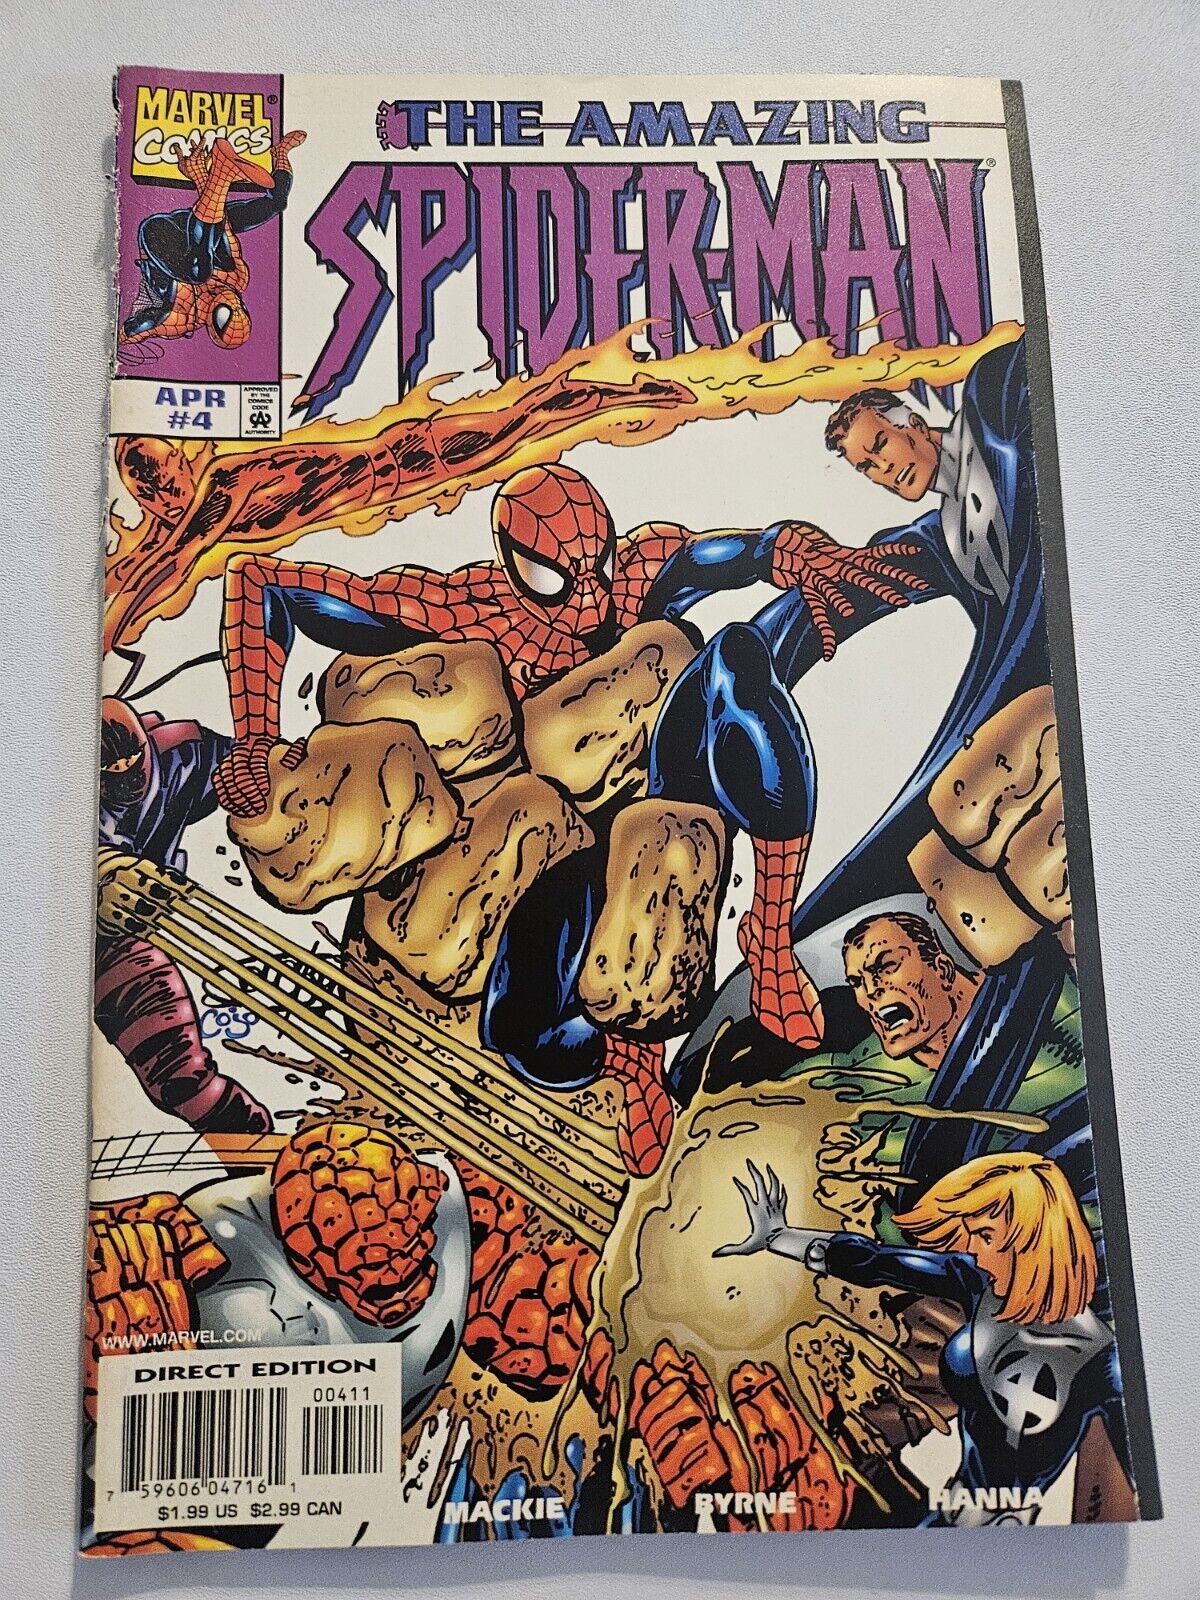 THE AMAZING SPIDER-MAN - # 4 - APRIL 1999 